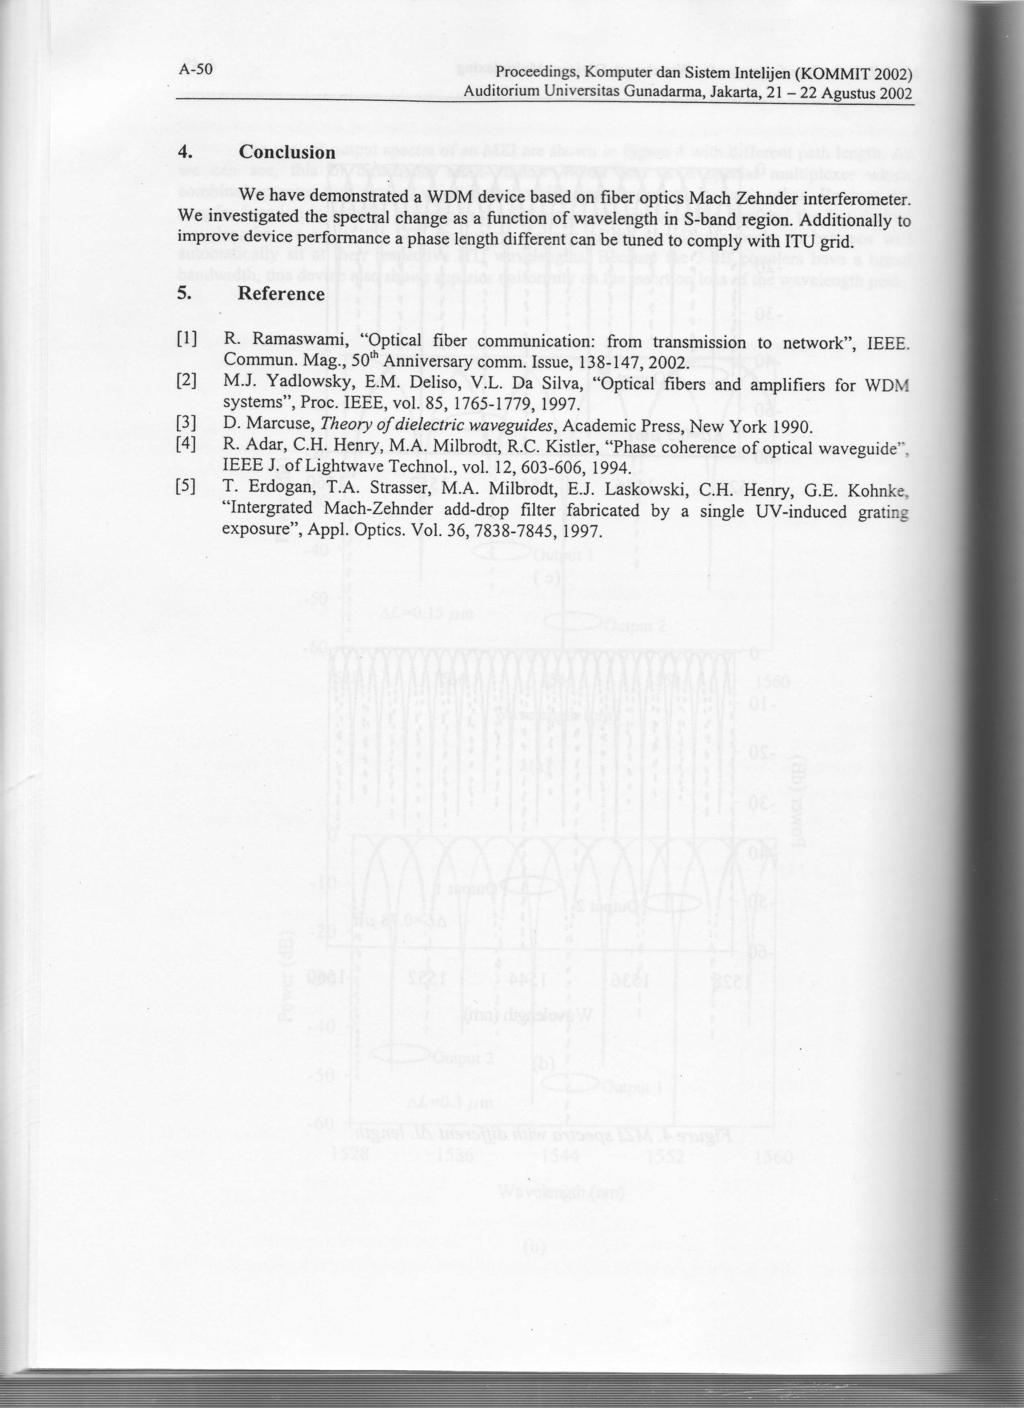 A-50 Proceedings, Kompuer dan Sisem nelijen (KOMMT 2002) Audiorium Universias Gunadarma, Jakara, 2l - 22 Aeusus 2002 4.